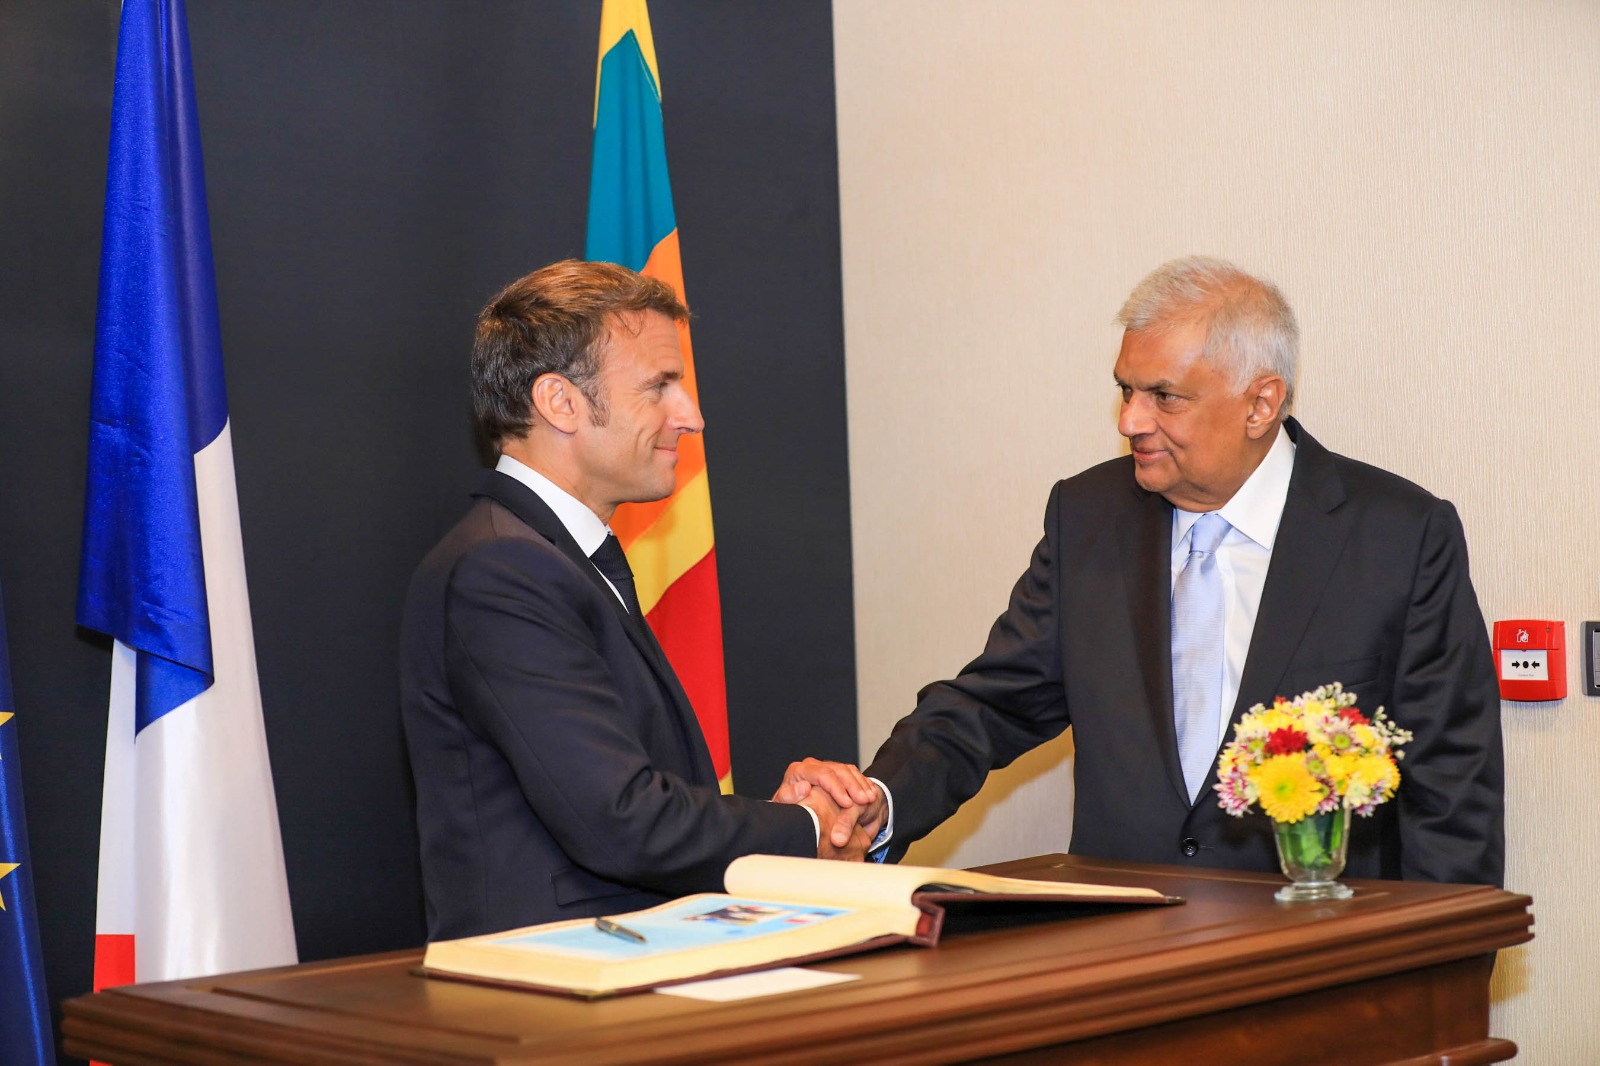 President Emmanuel Macron to Visit Sri Lanka Following Papua New Guinea Trip